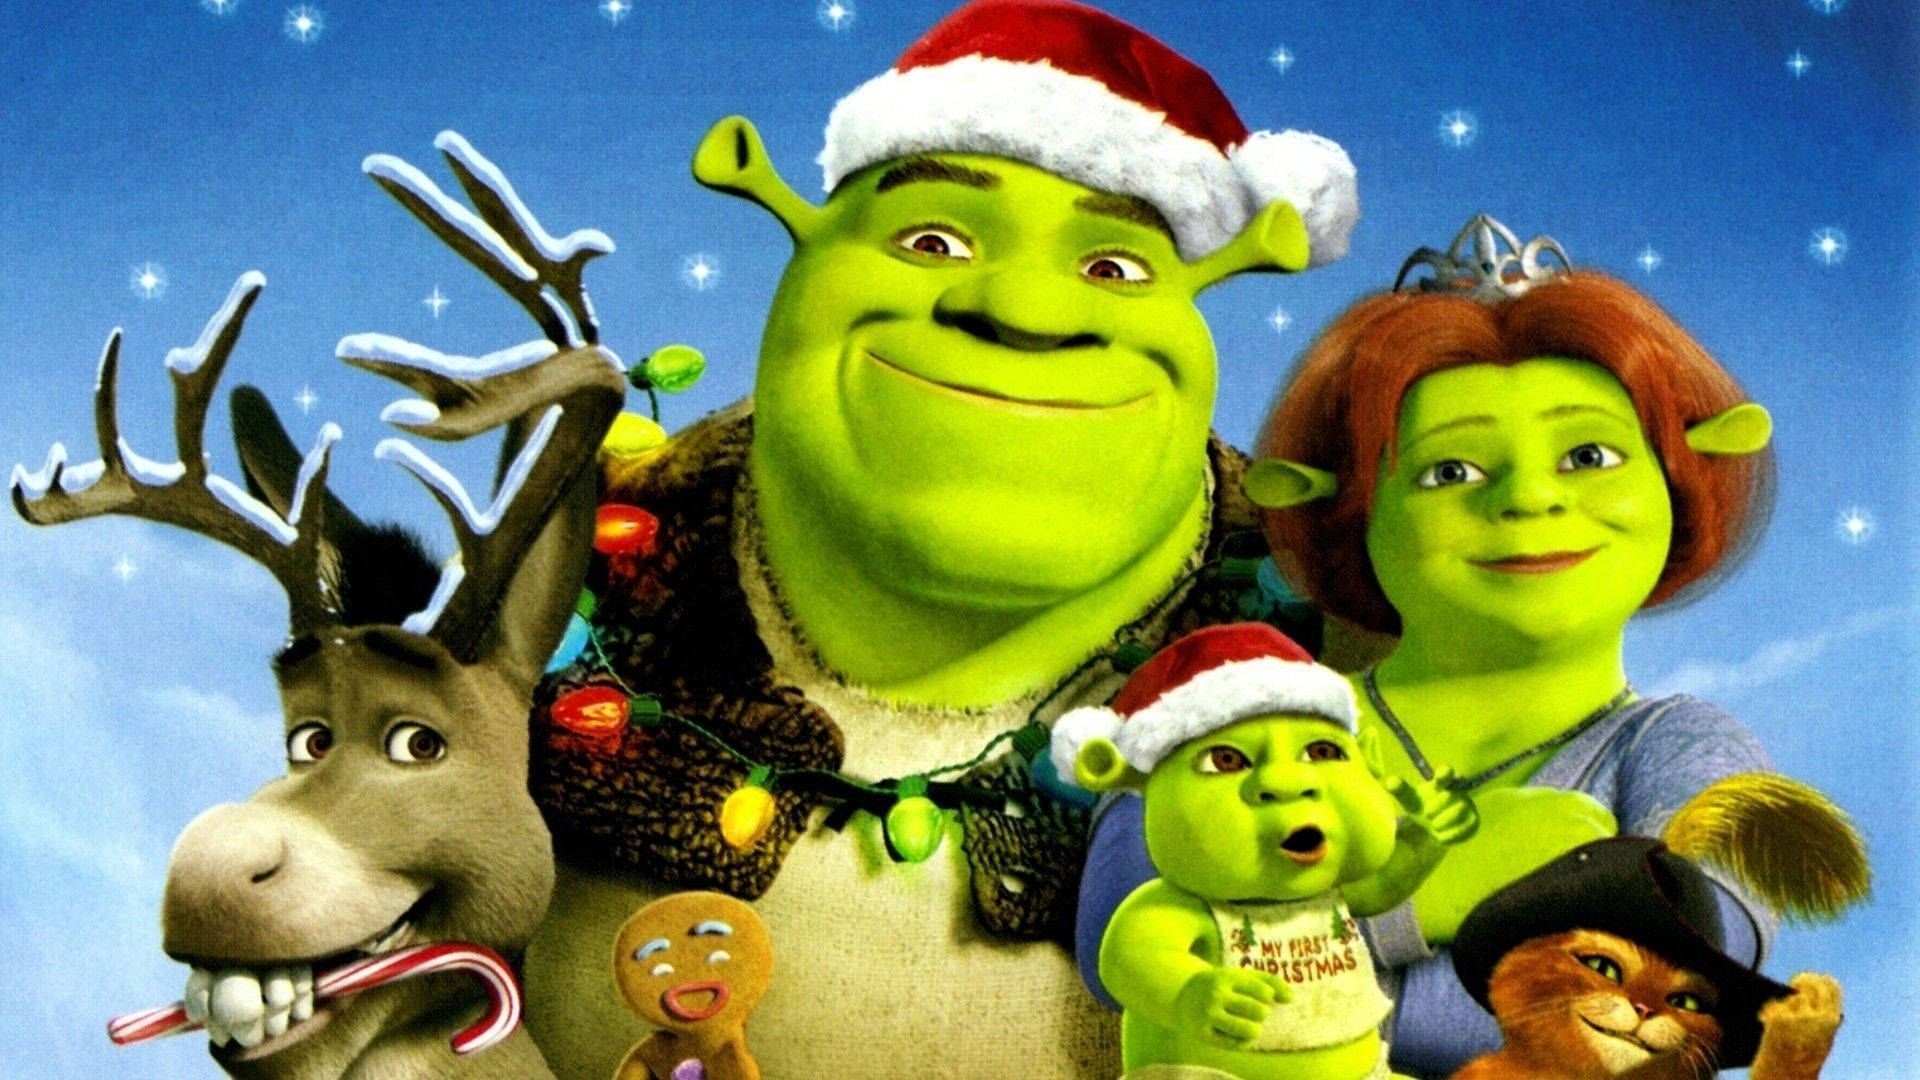 Holiday Themed Shrek PC Game Wallpaper